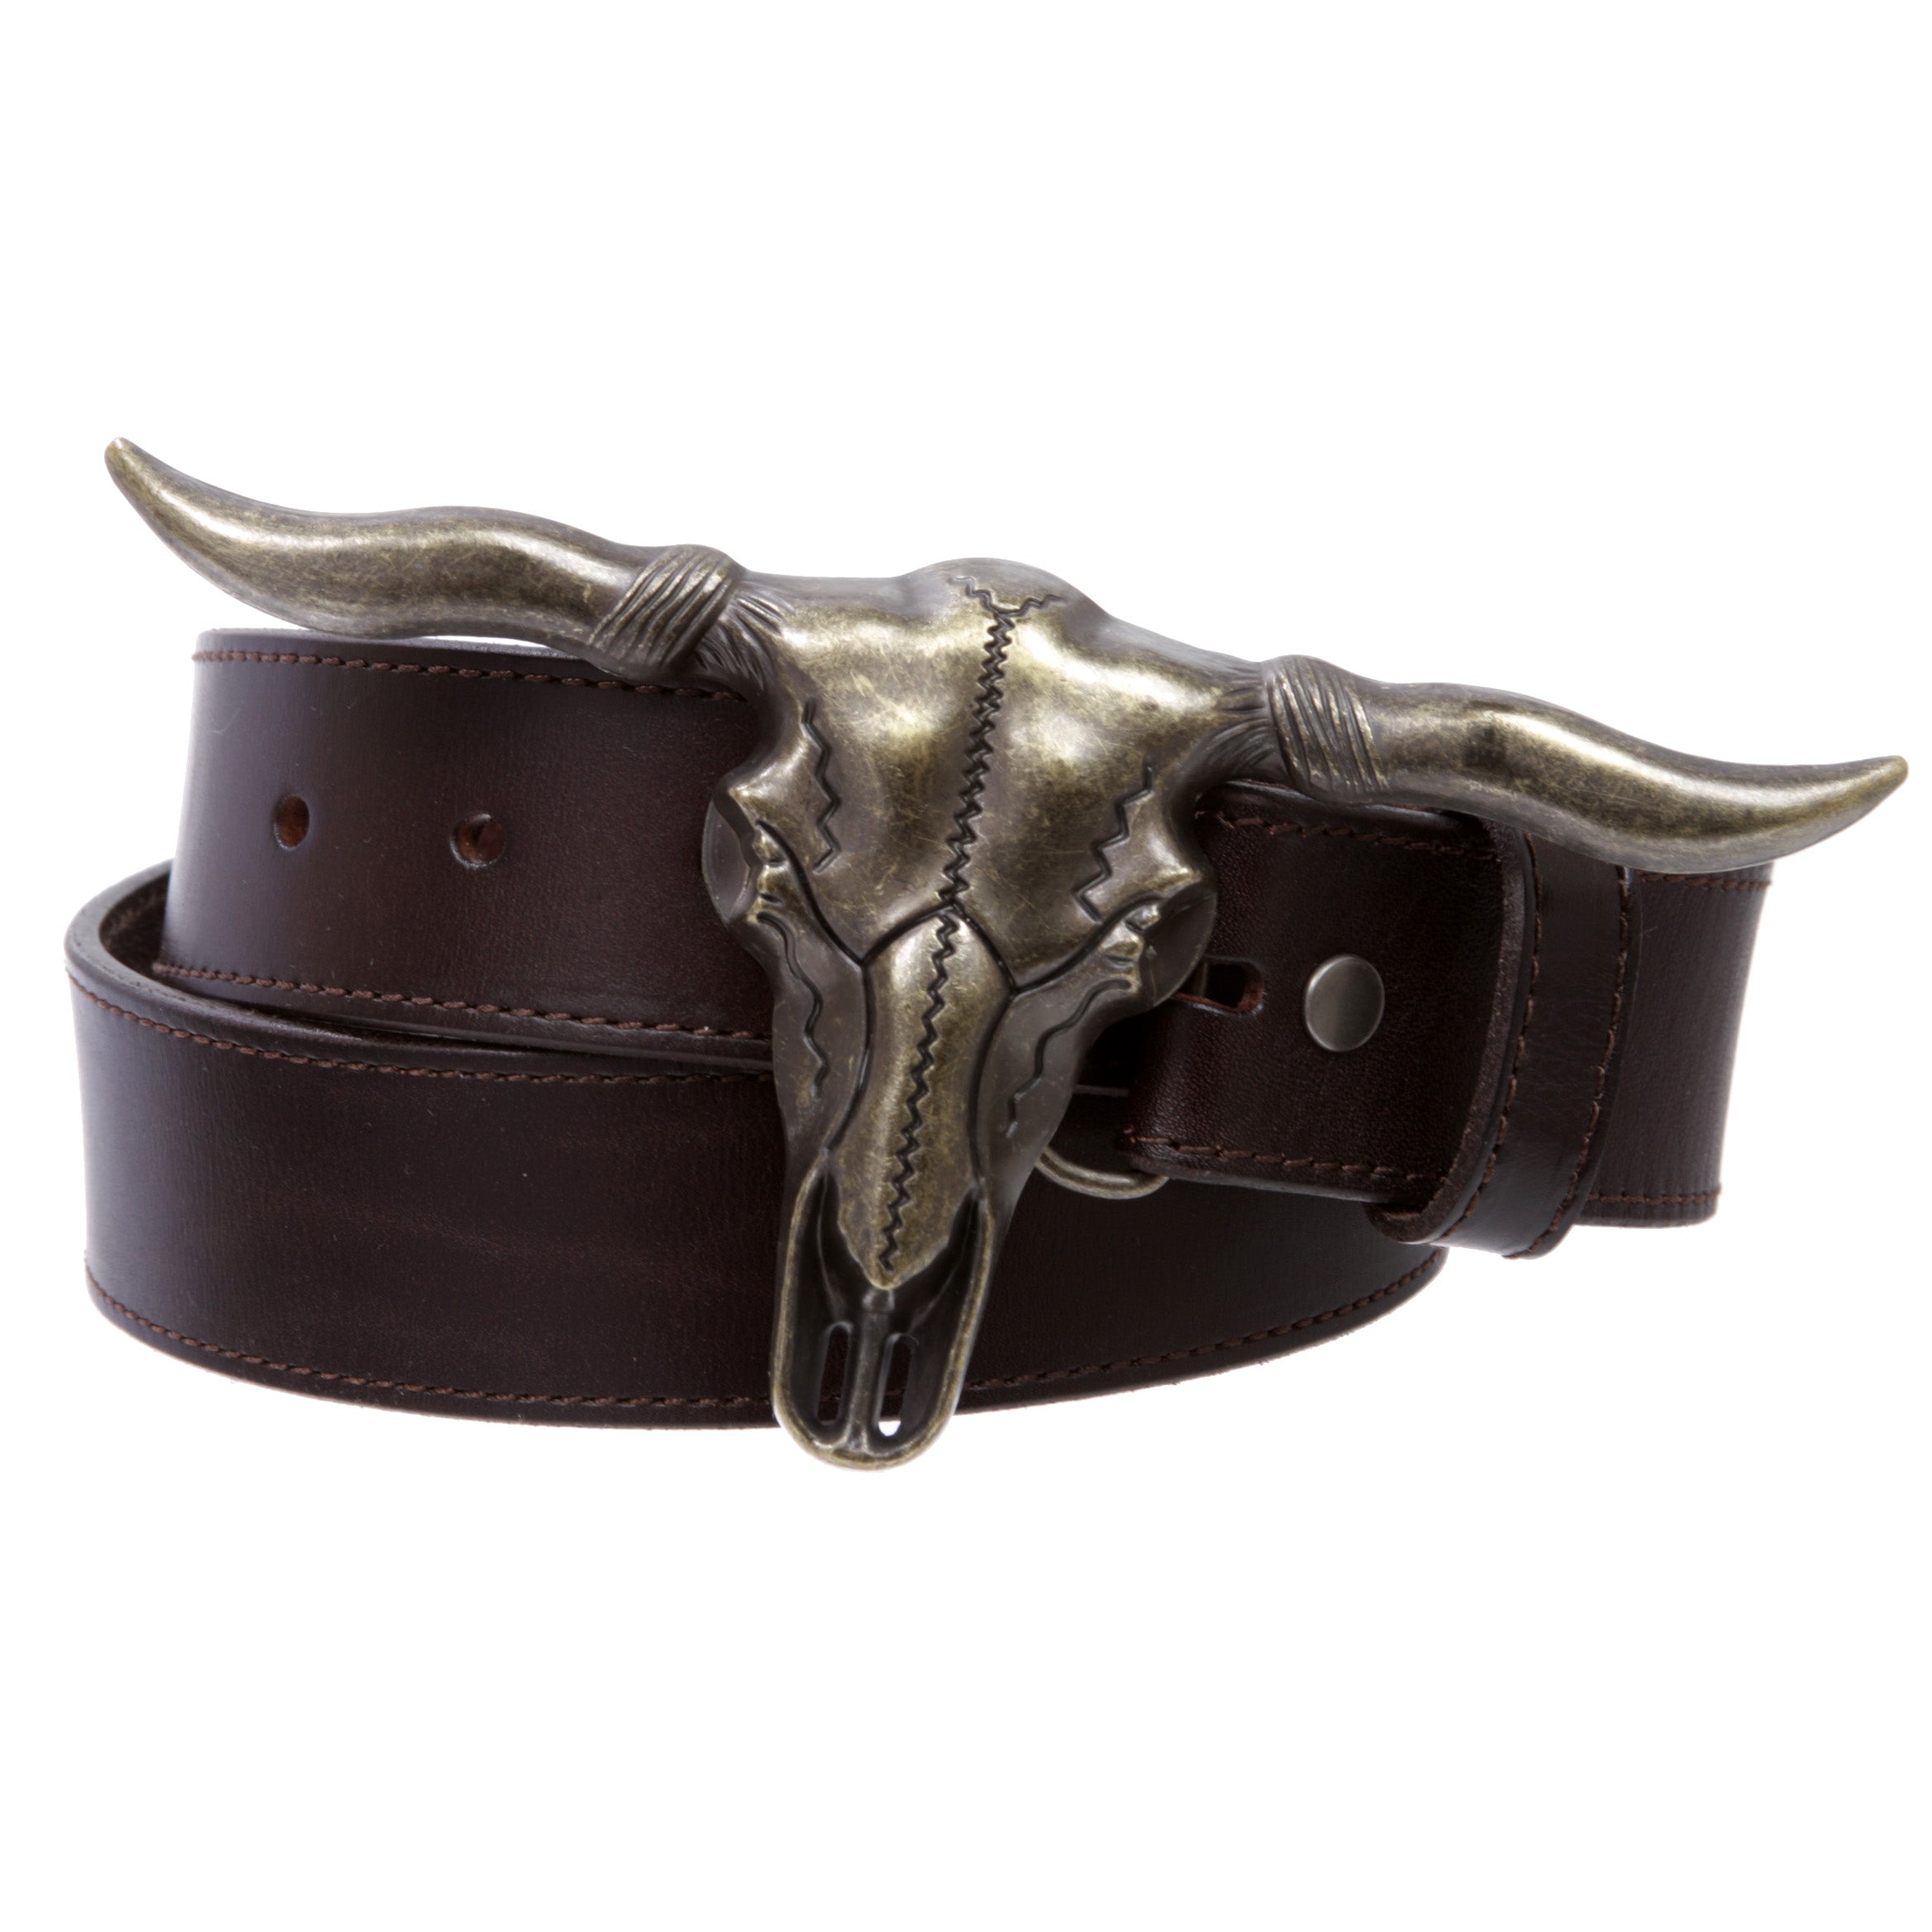 1 1/2" Snap On Horn Bull Western Texas Cowboy Large Buckle With Cow High Full Top Grain Leather Plain Belt